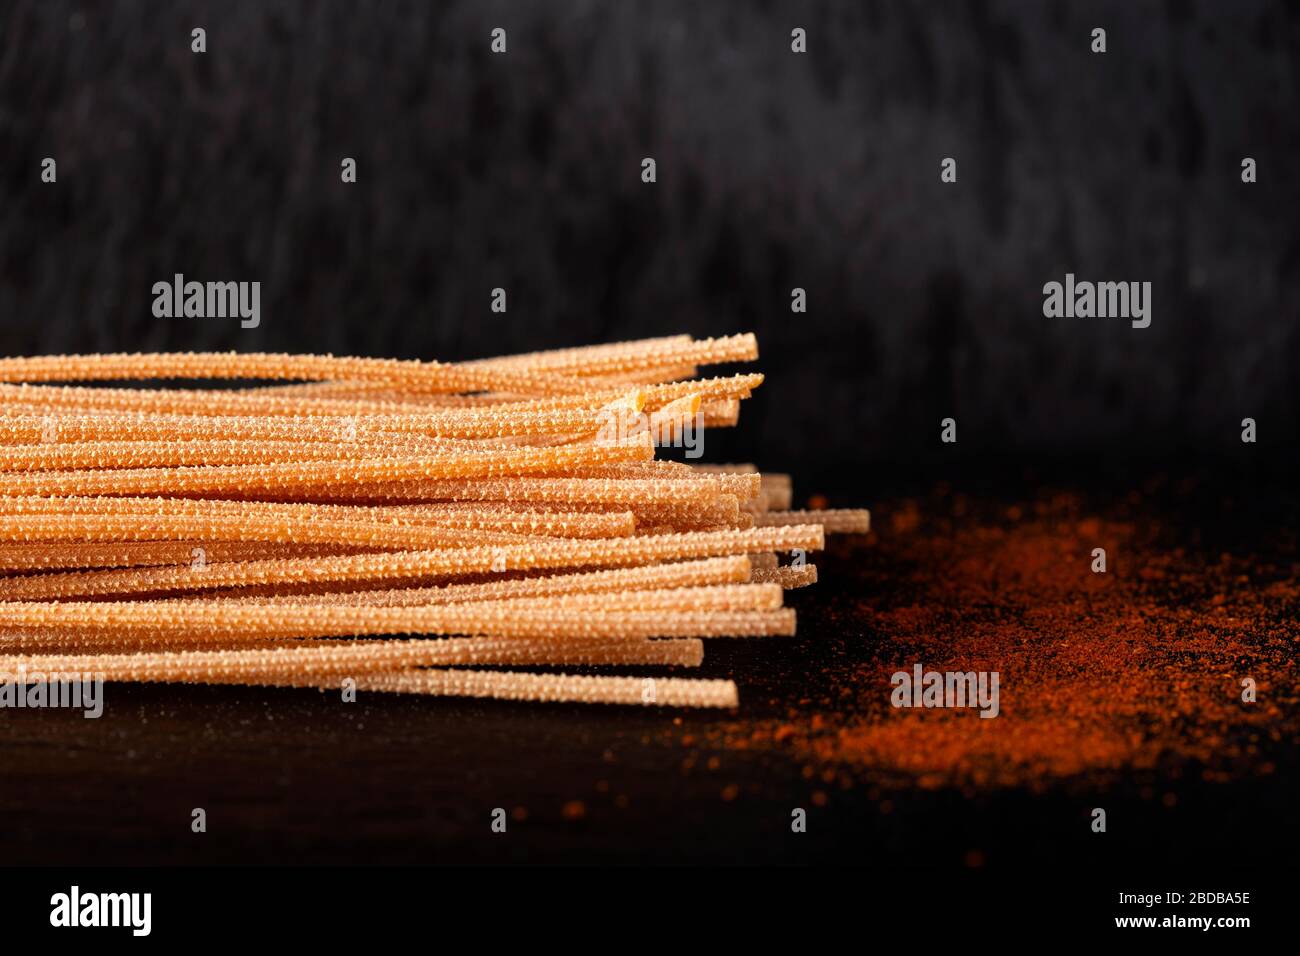 Spaghetti with chili and chili powder on slate Stock Photo